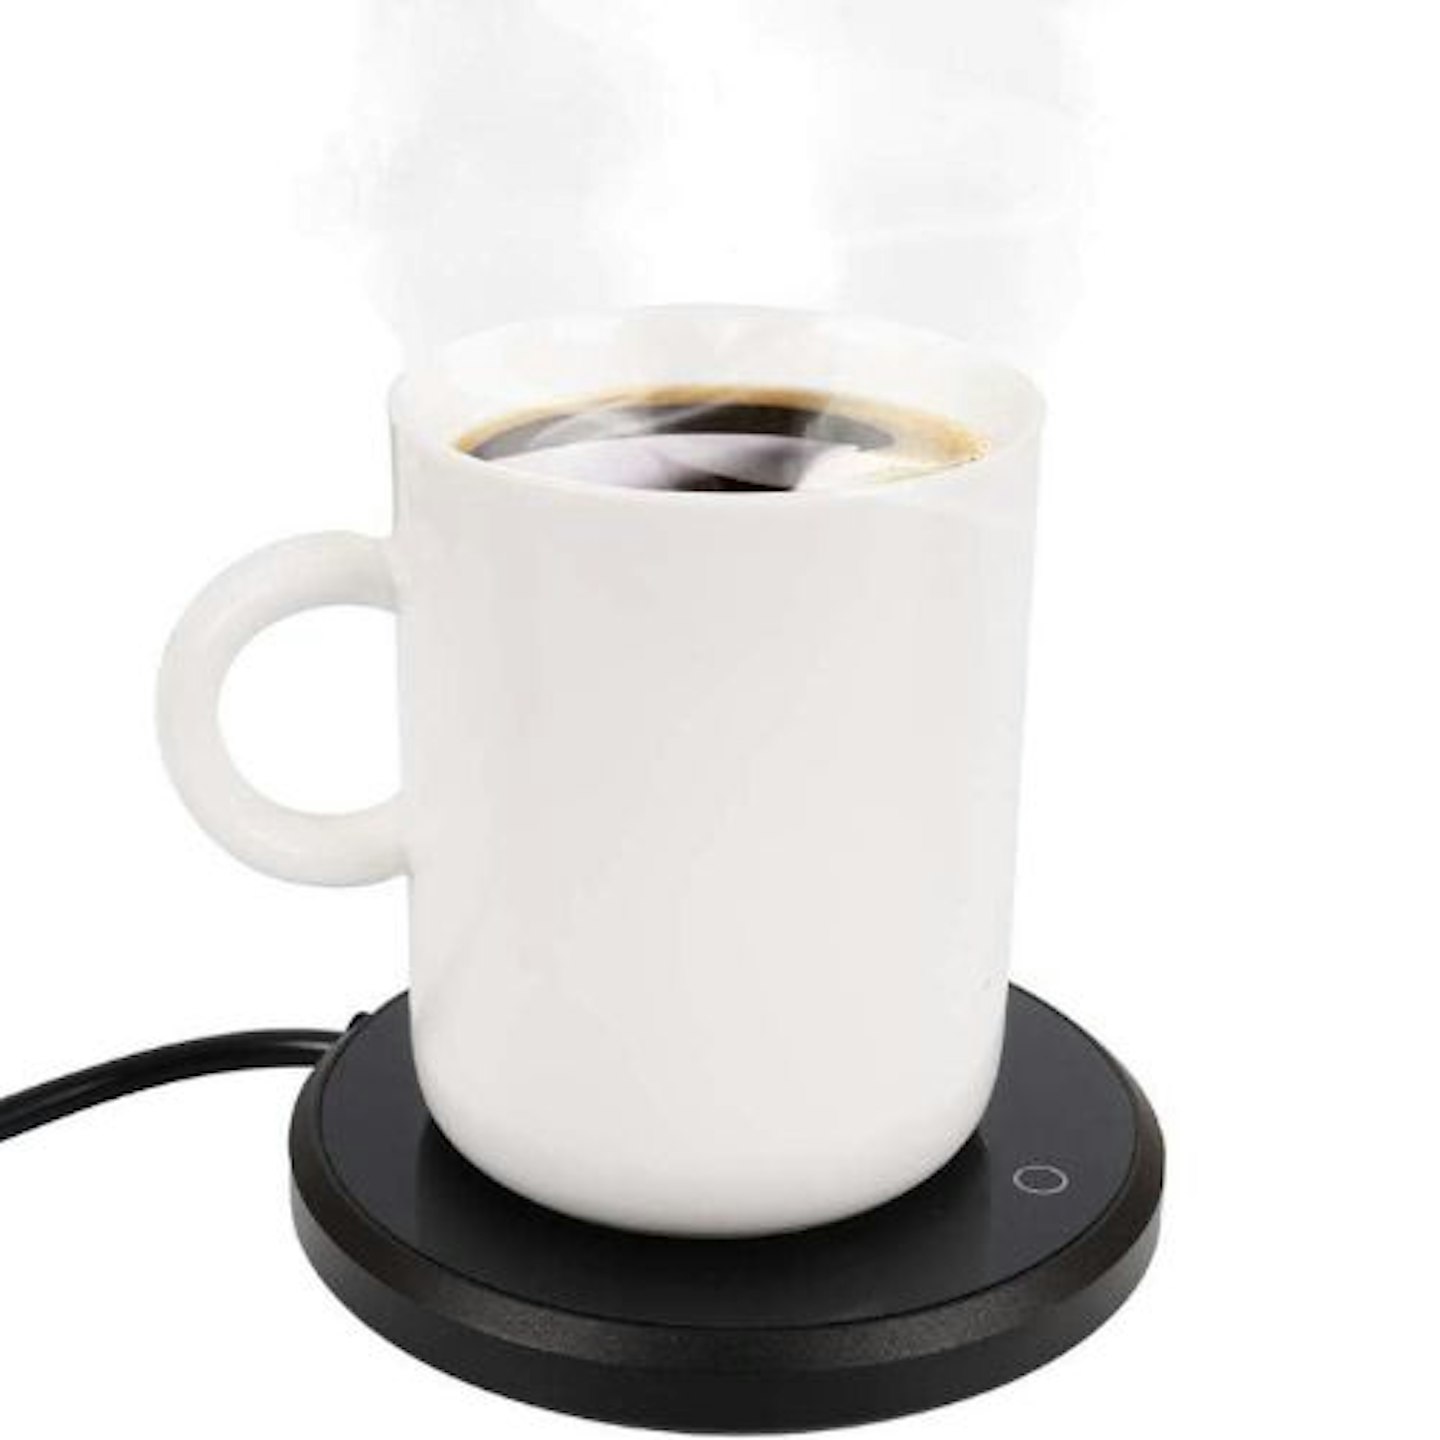  First Father's Day Gifts: Coffee Mug Warmer 